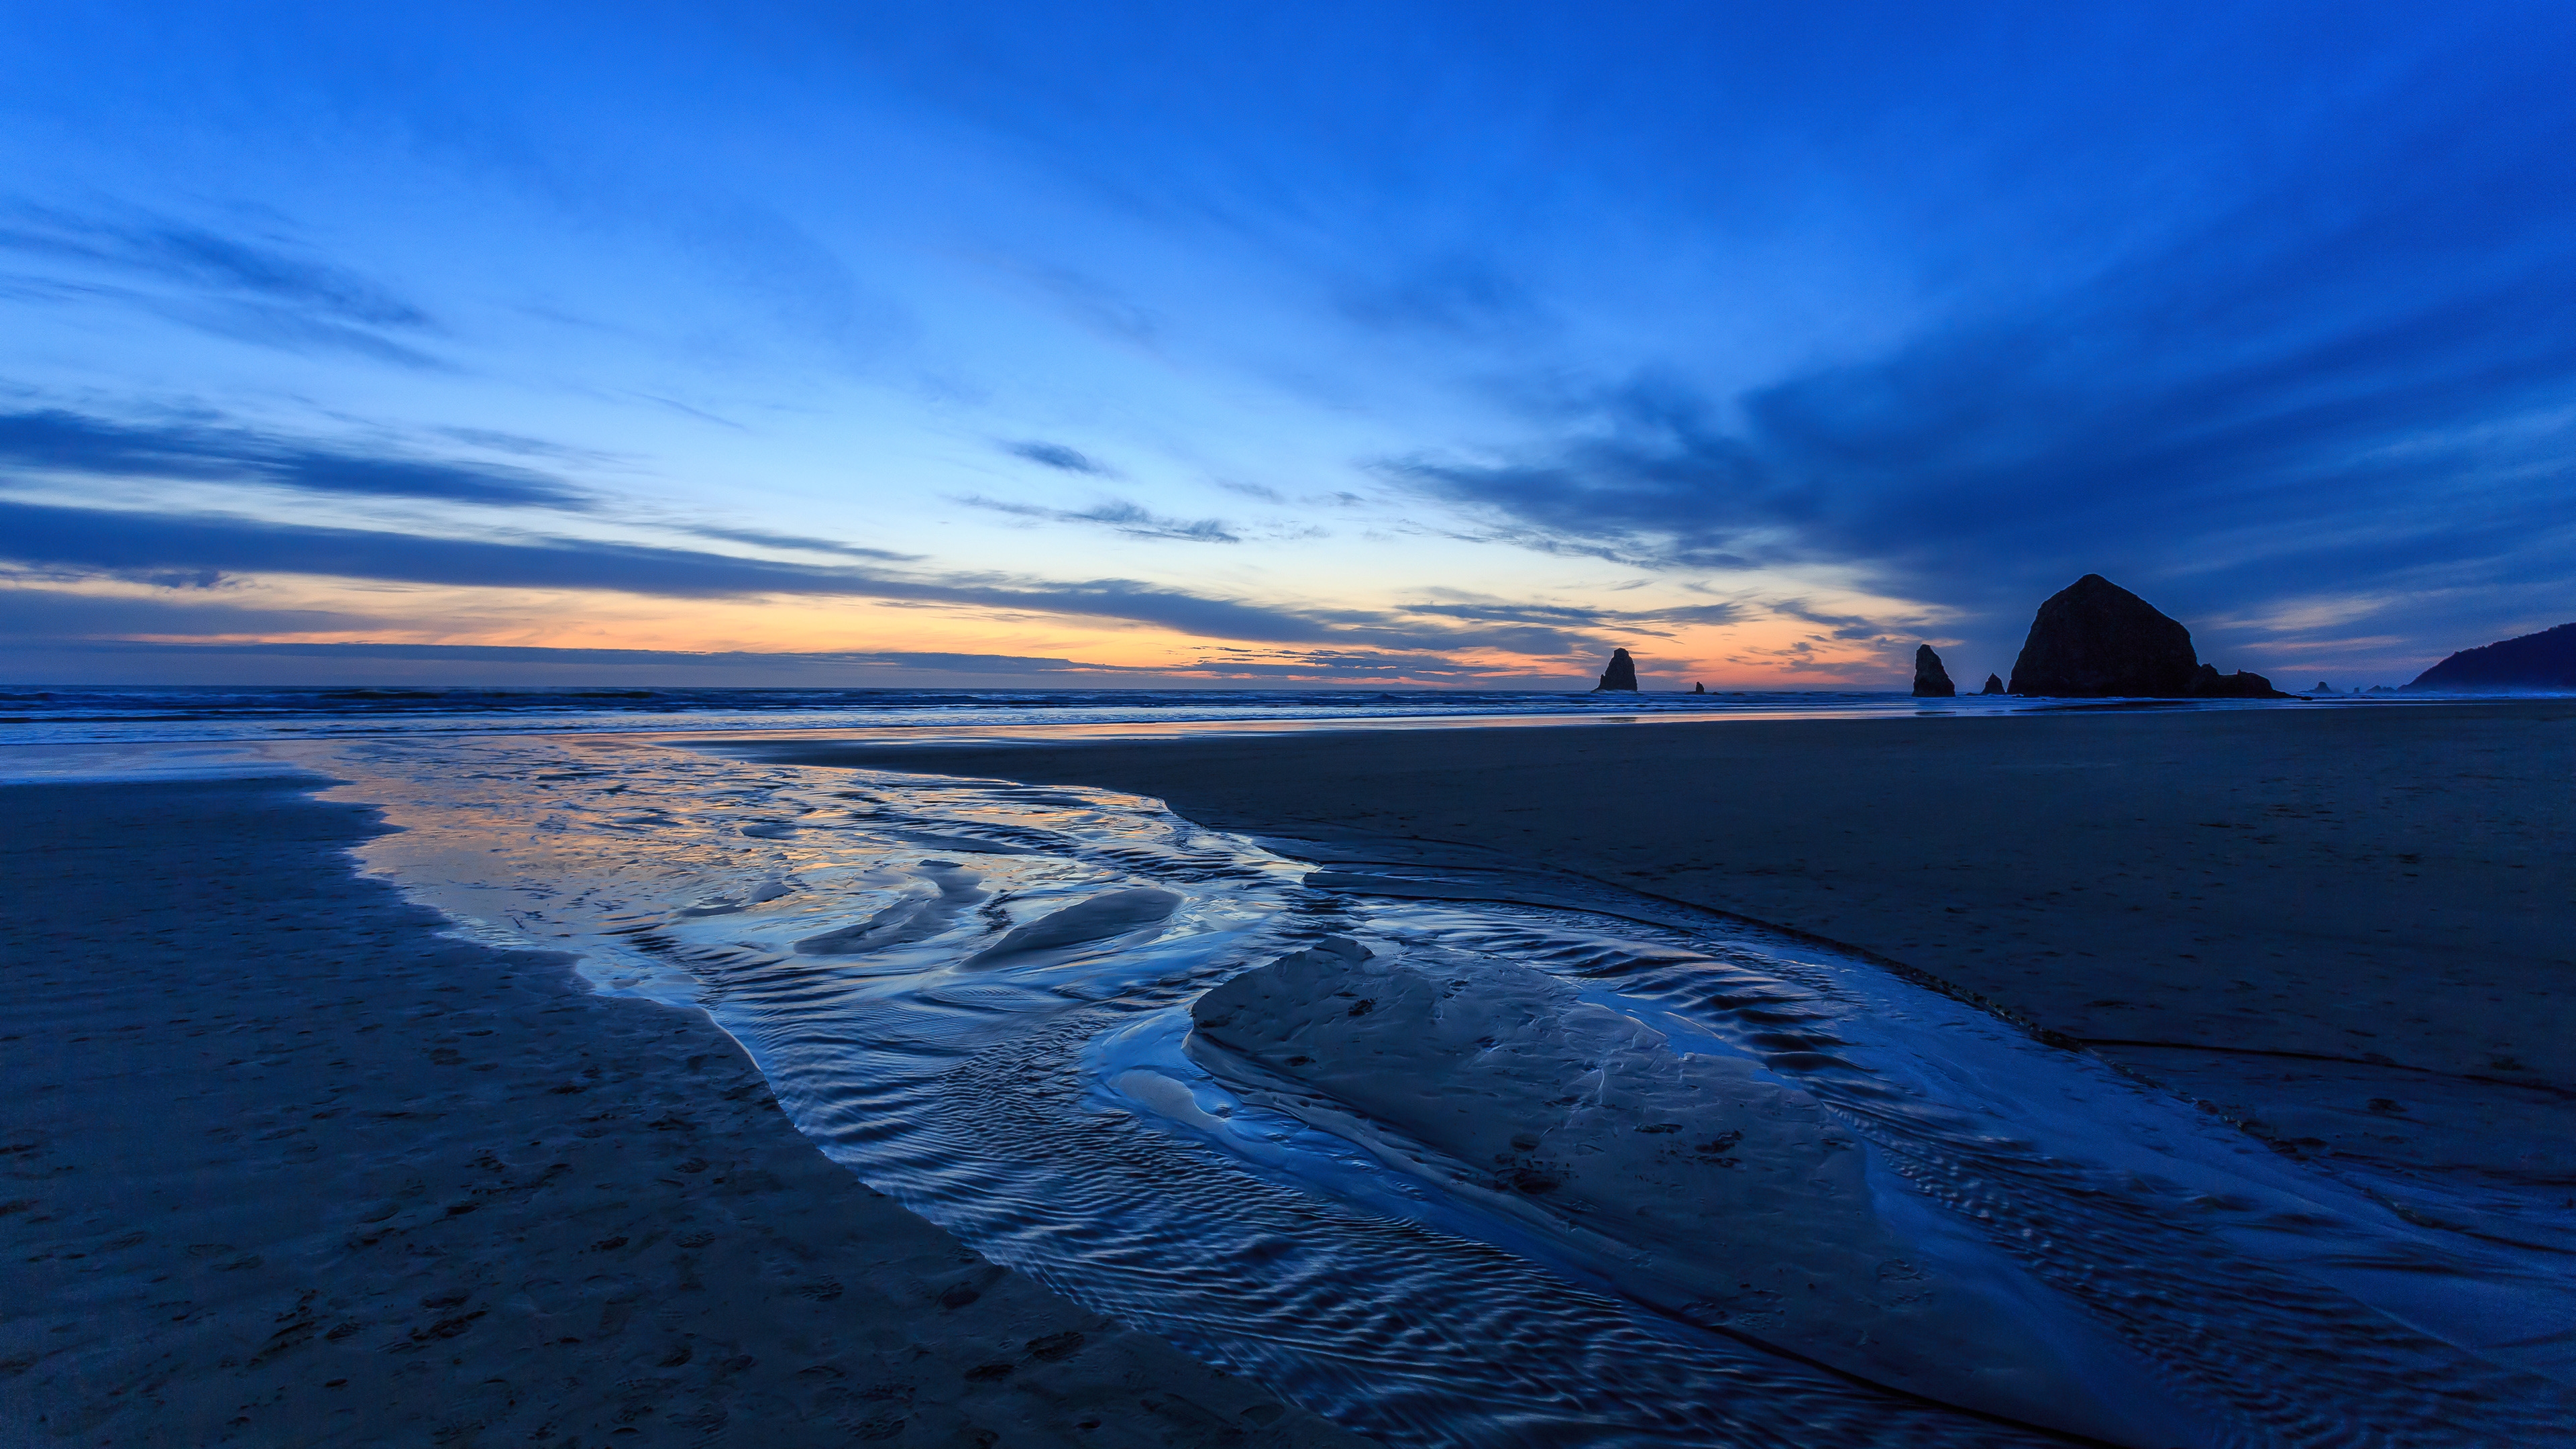 Sunset Oregon Beach for 3840 x 2160 Ultra HD resolution